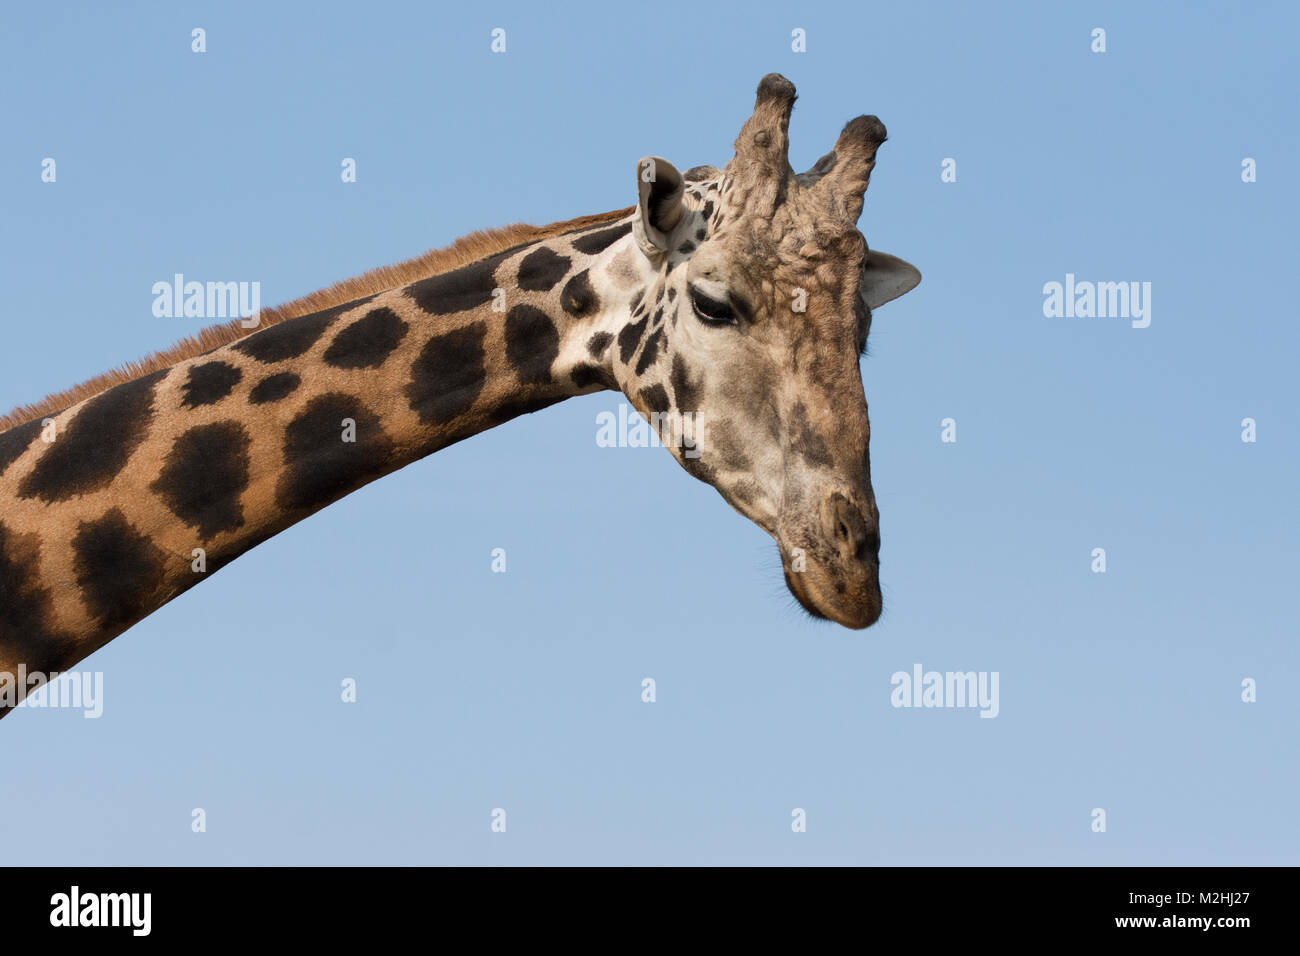 Giraffe with long neck Stock Photo